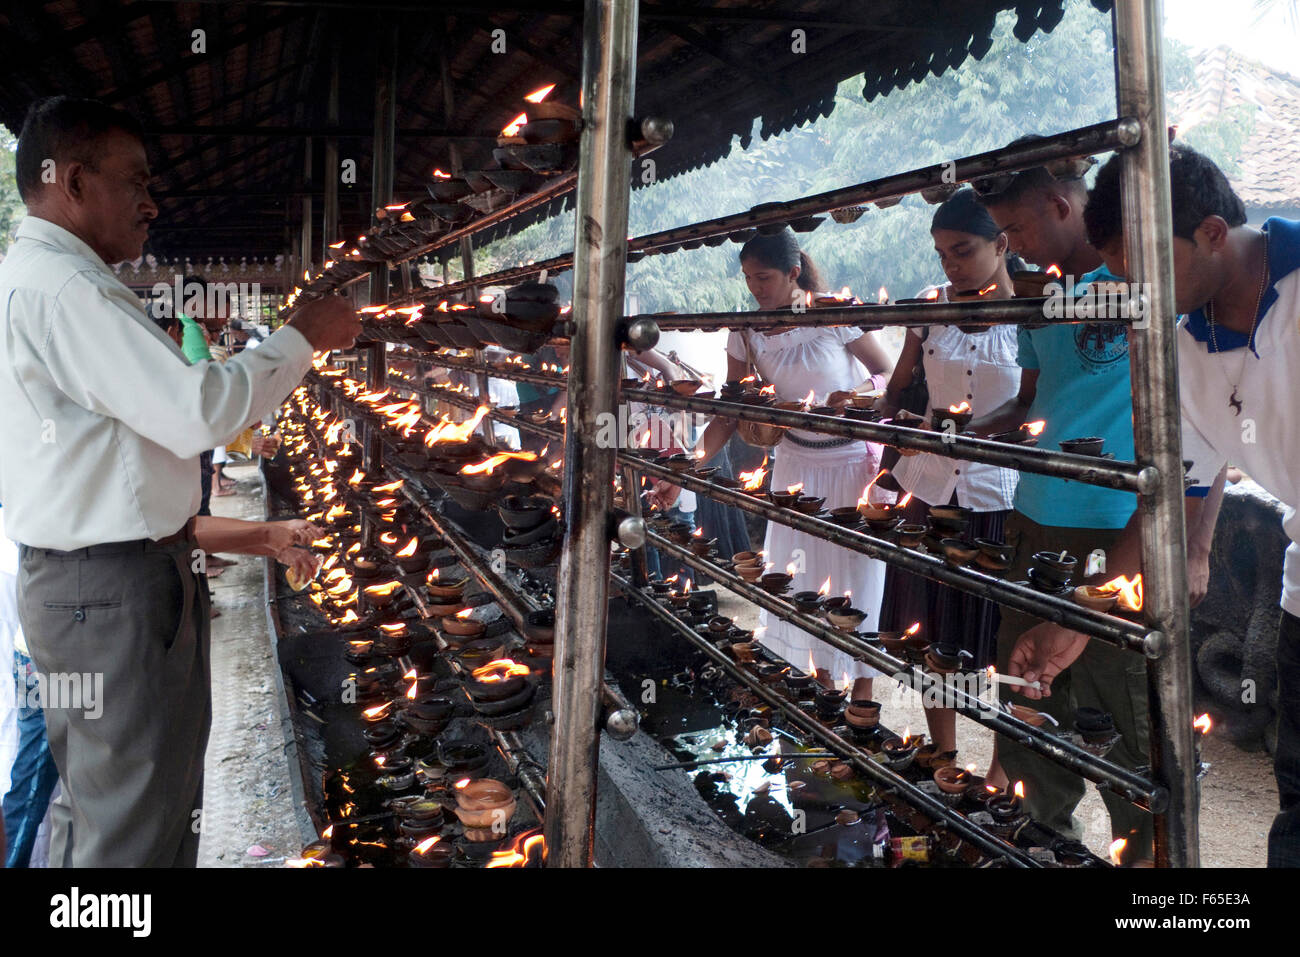 Street cuisine with lanterns, sea in background, Colombo, Sri Lanka Stock Photo